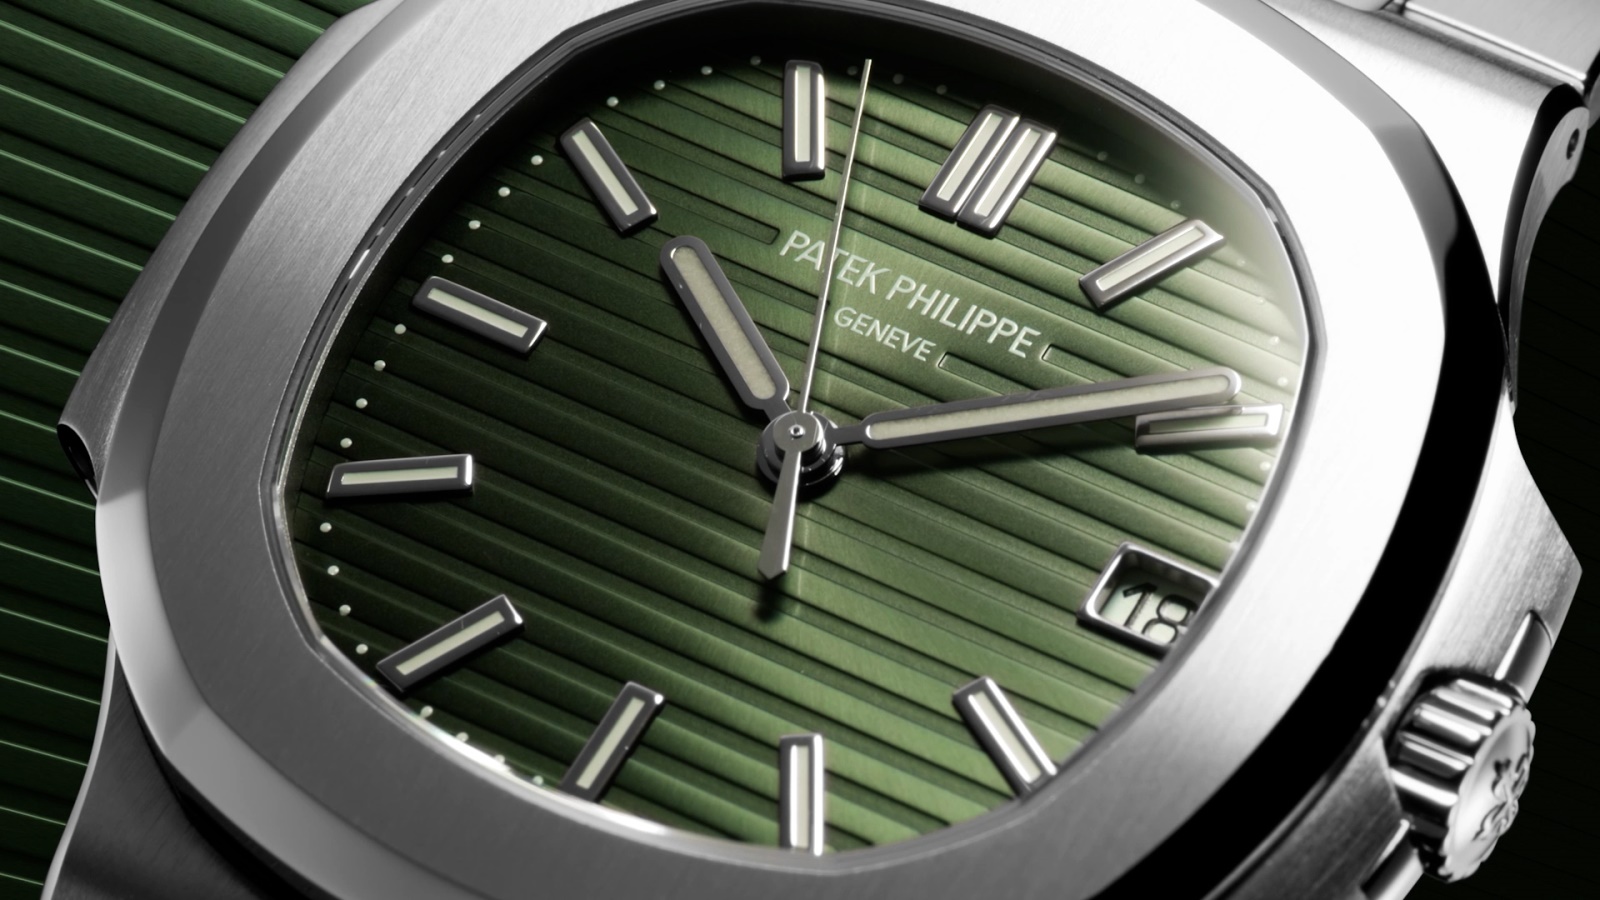 Rolex, Patek, Audemars Piguet Pre-Owned Watch Sales to Top New Sales by 2033